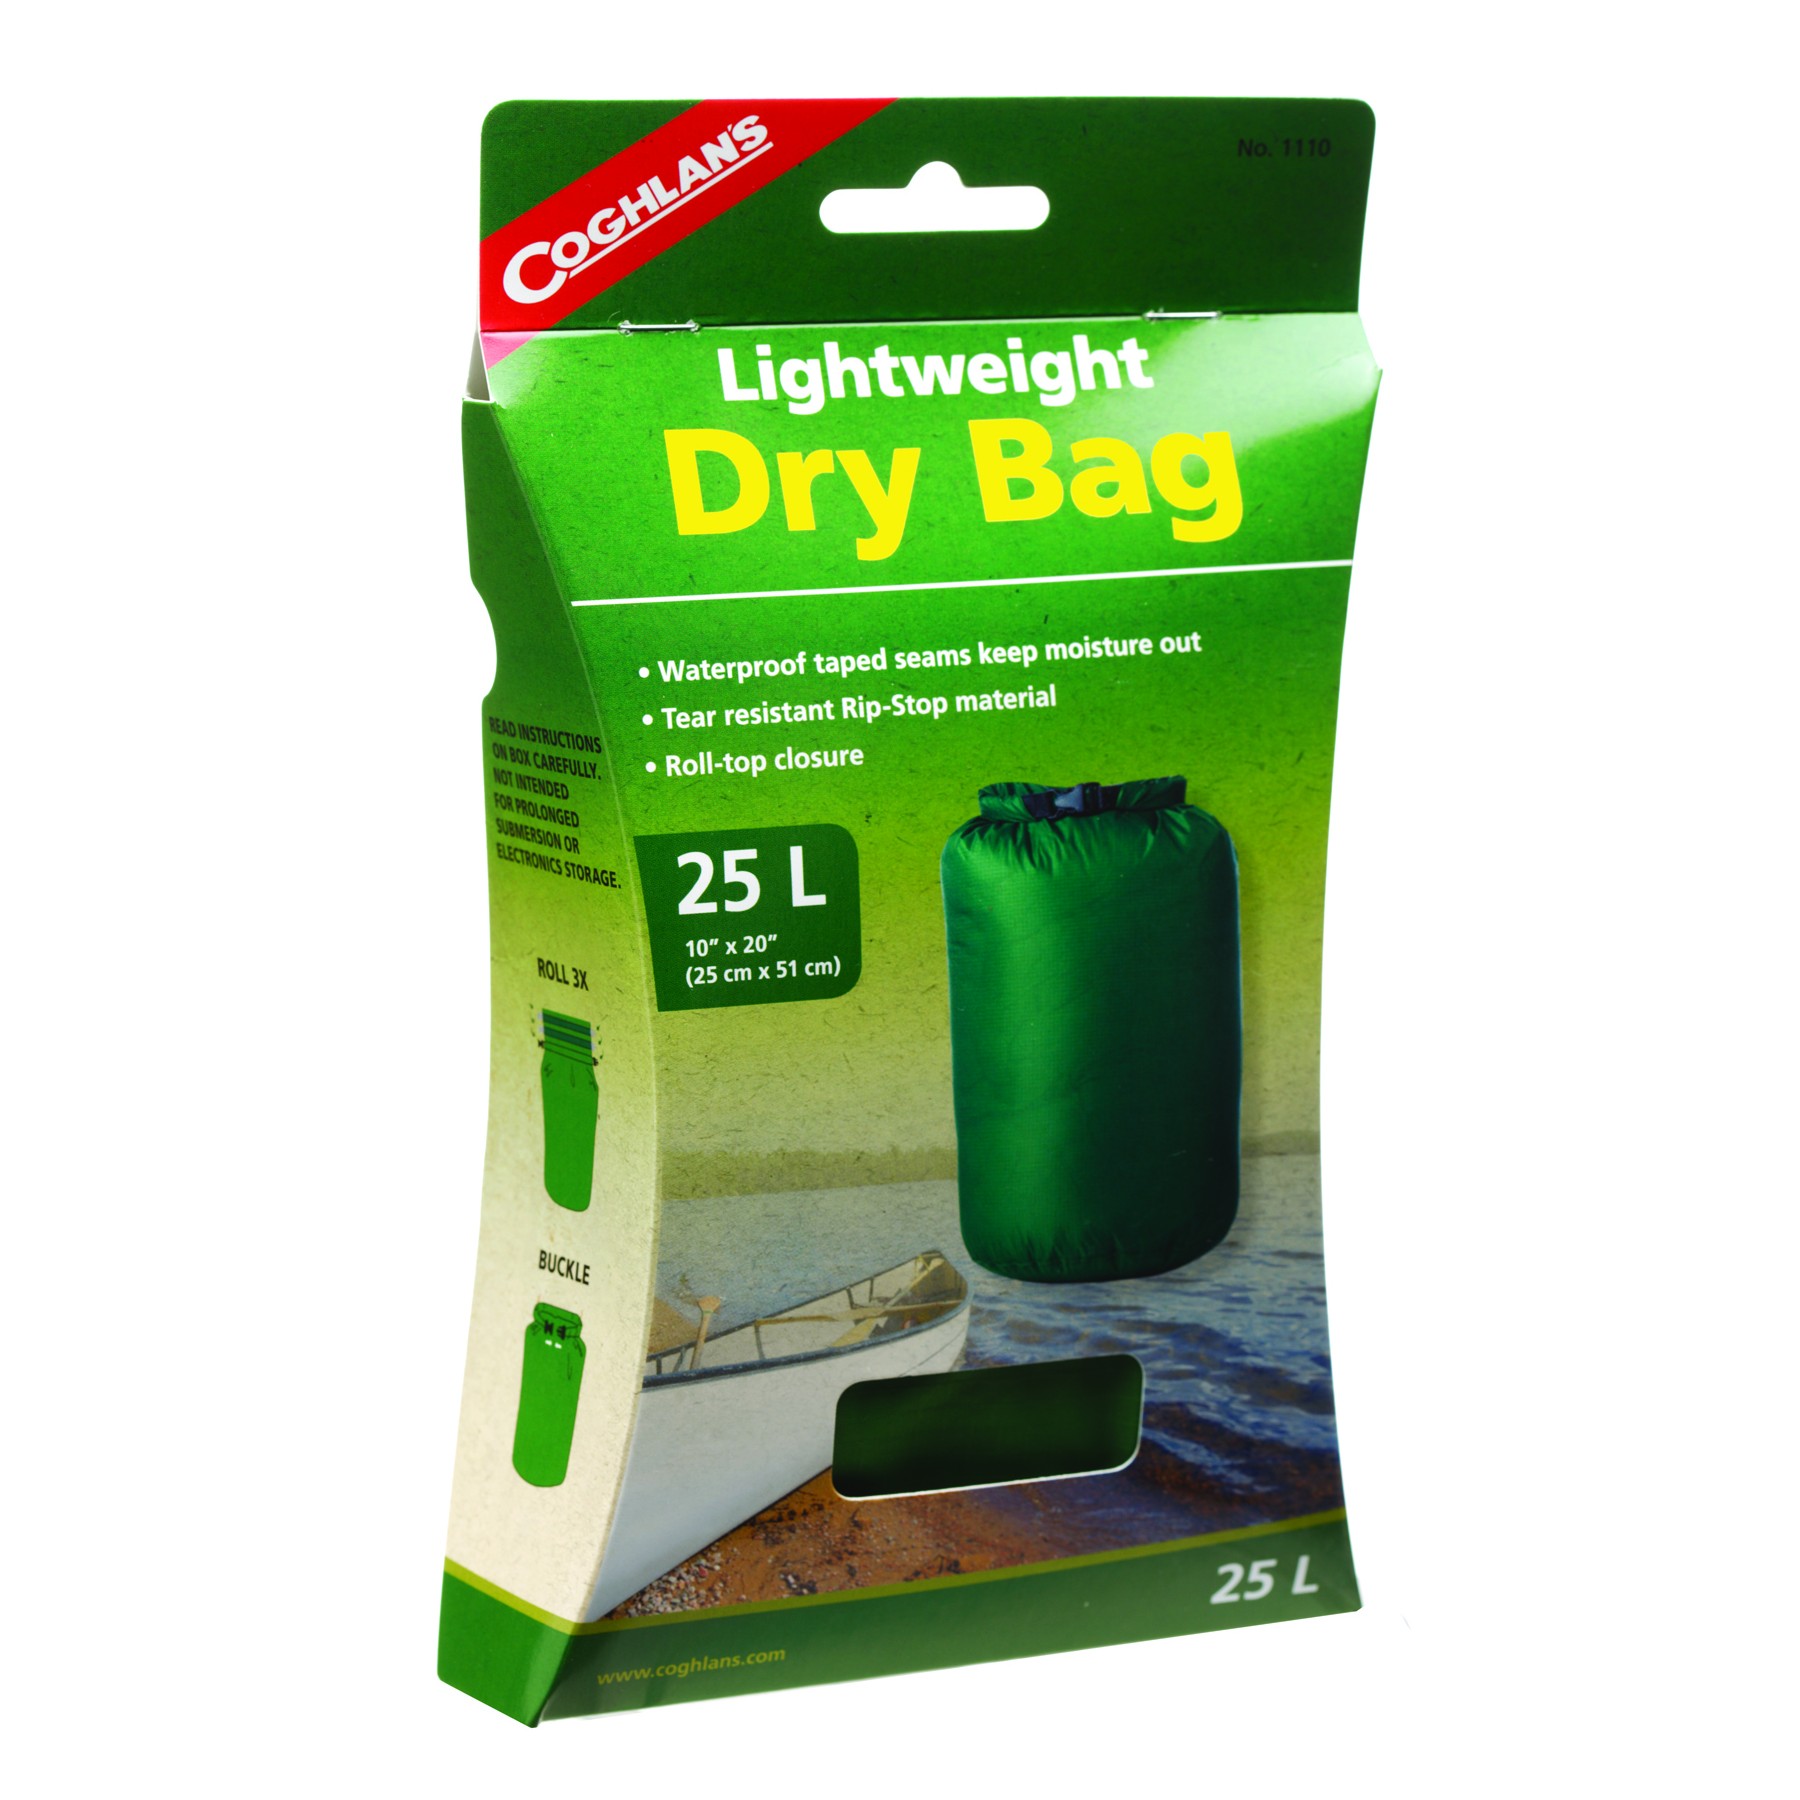 Coghlan's Lightweight Dry Bag 25L (1110) - зображення 1